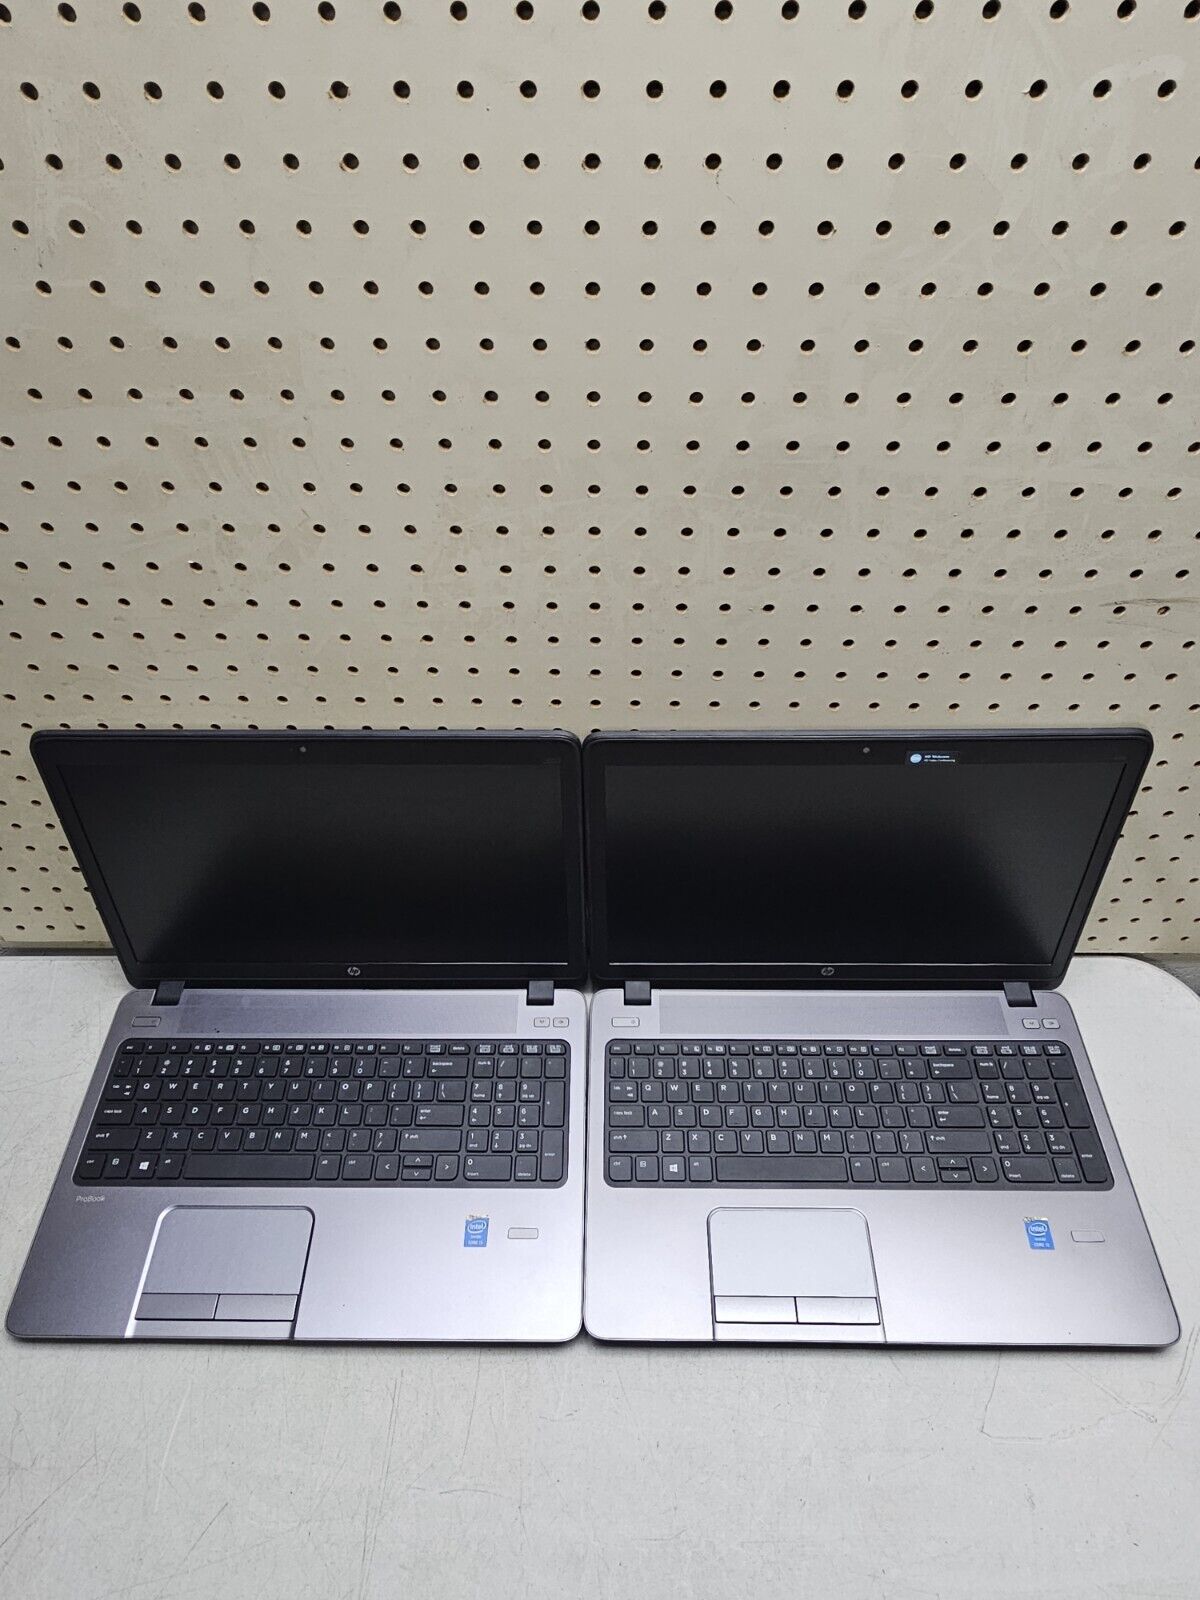 Lot of Two (2) HP ProBook 450 G1 Laptops - i3-4000M - 8GB RAM - 500GB HDD - READ